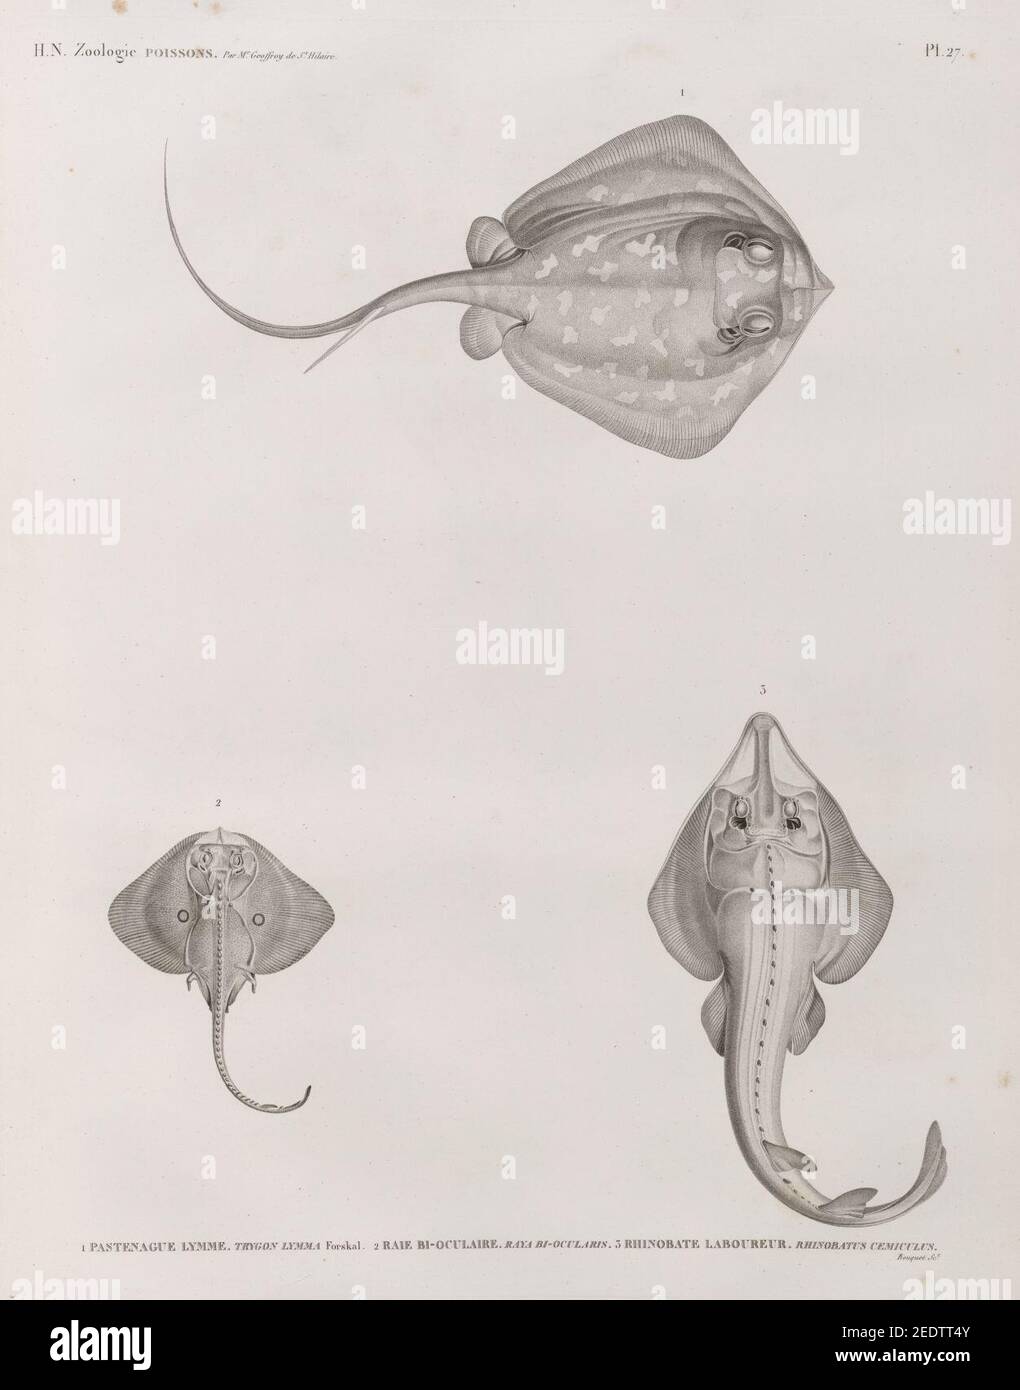 Zoologie. Poissons. 1. Pastenague lymme (Trygon lymma) forskal; 2. Raie bi-oculaire; 3. Rhinobate laboureur (Rhinobatus cemiculus) Stock Photo